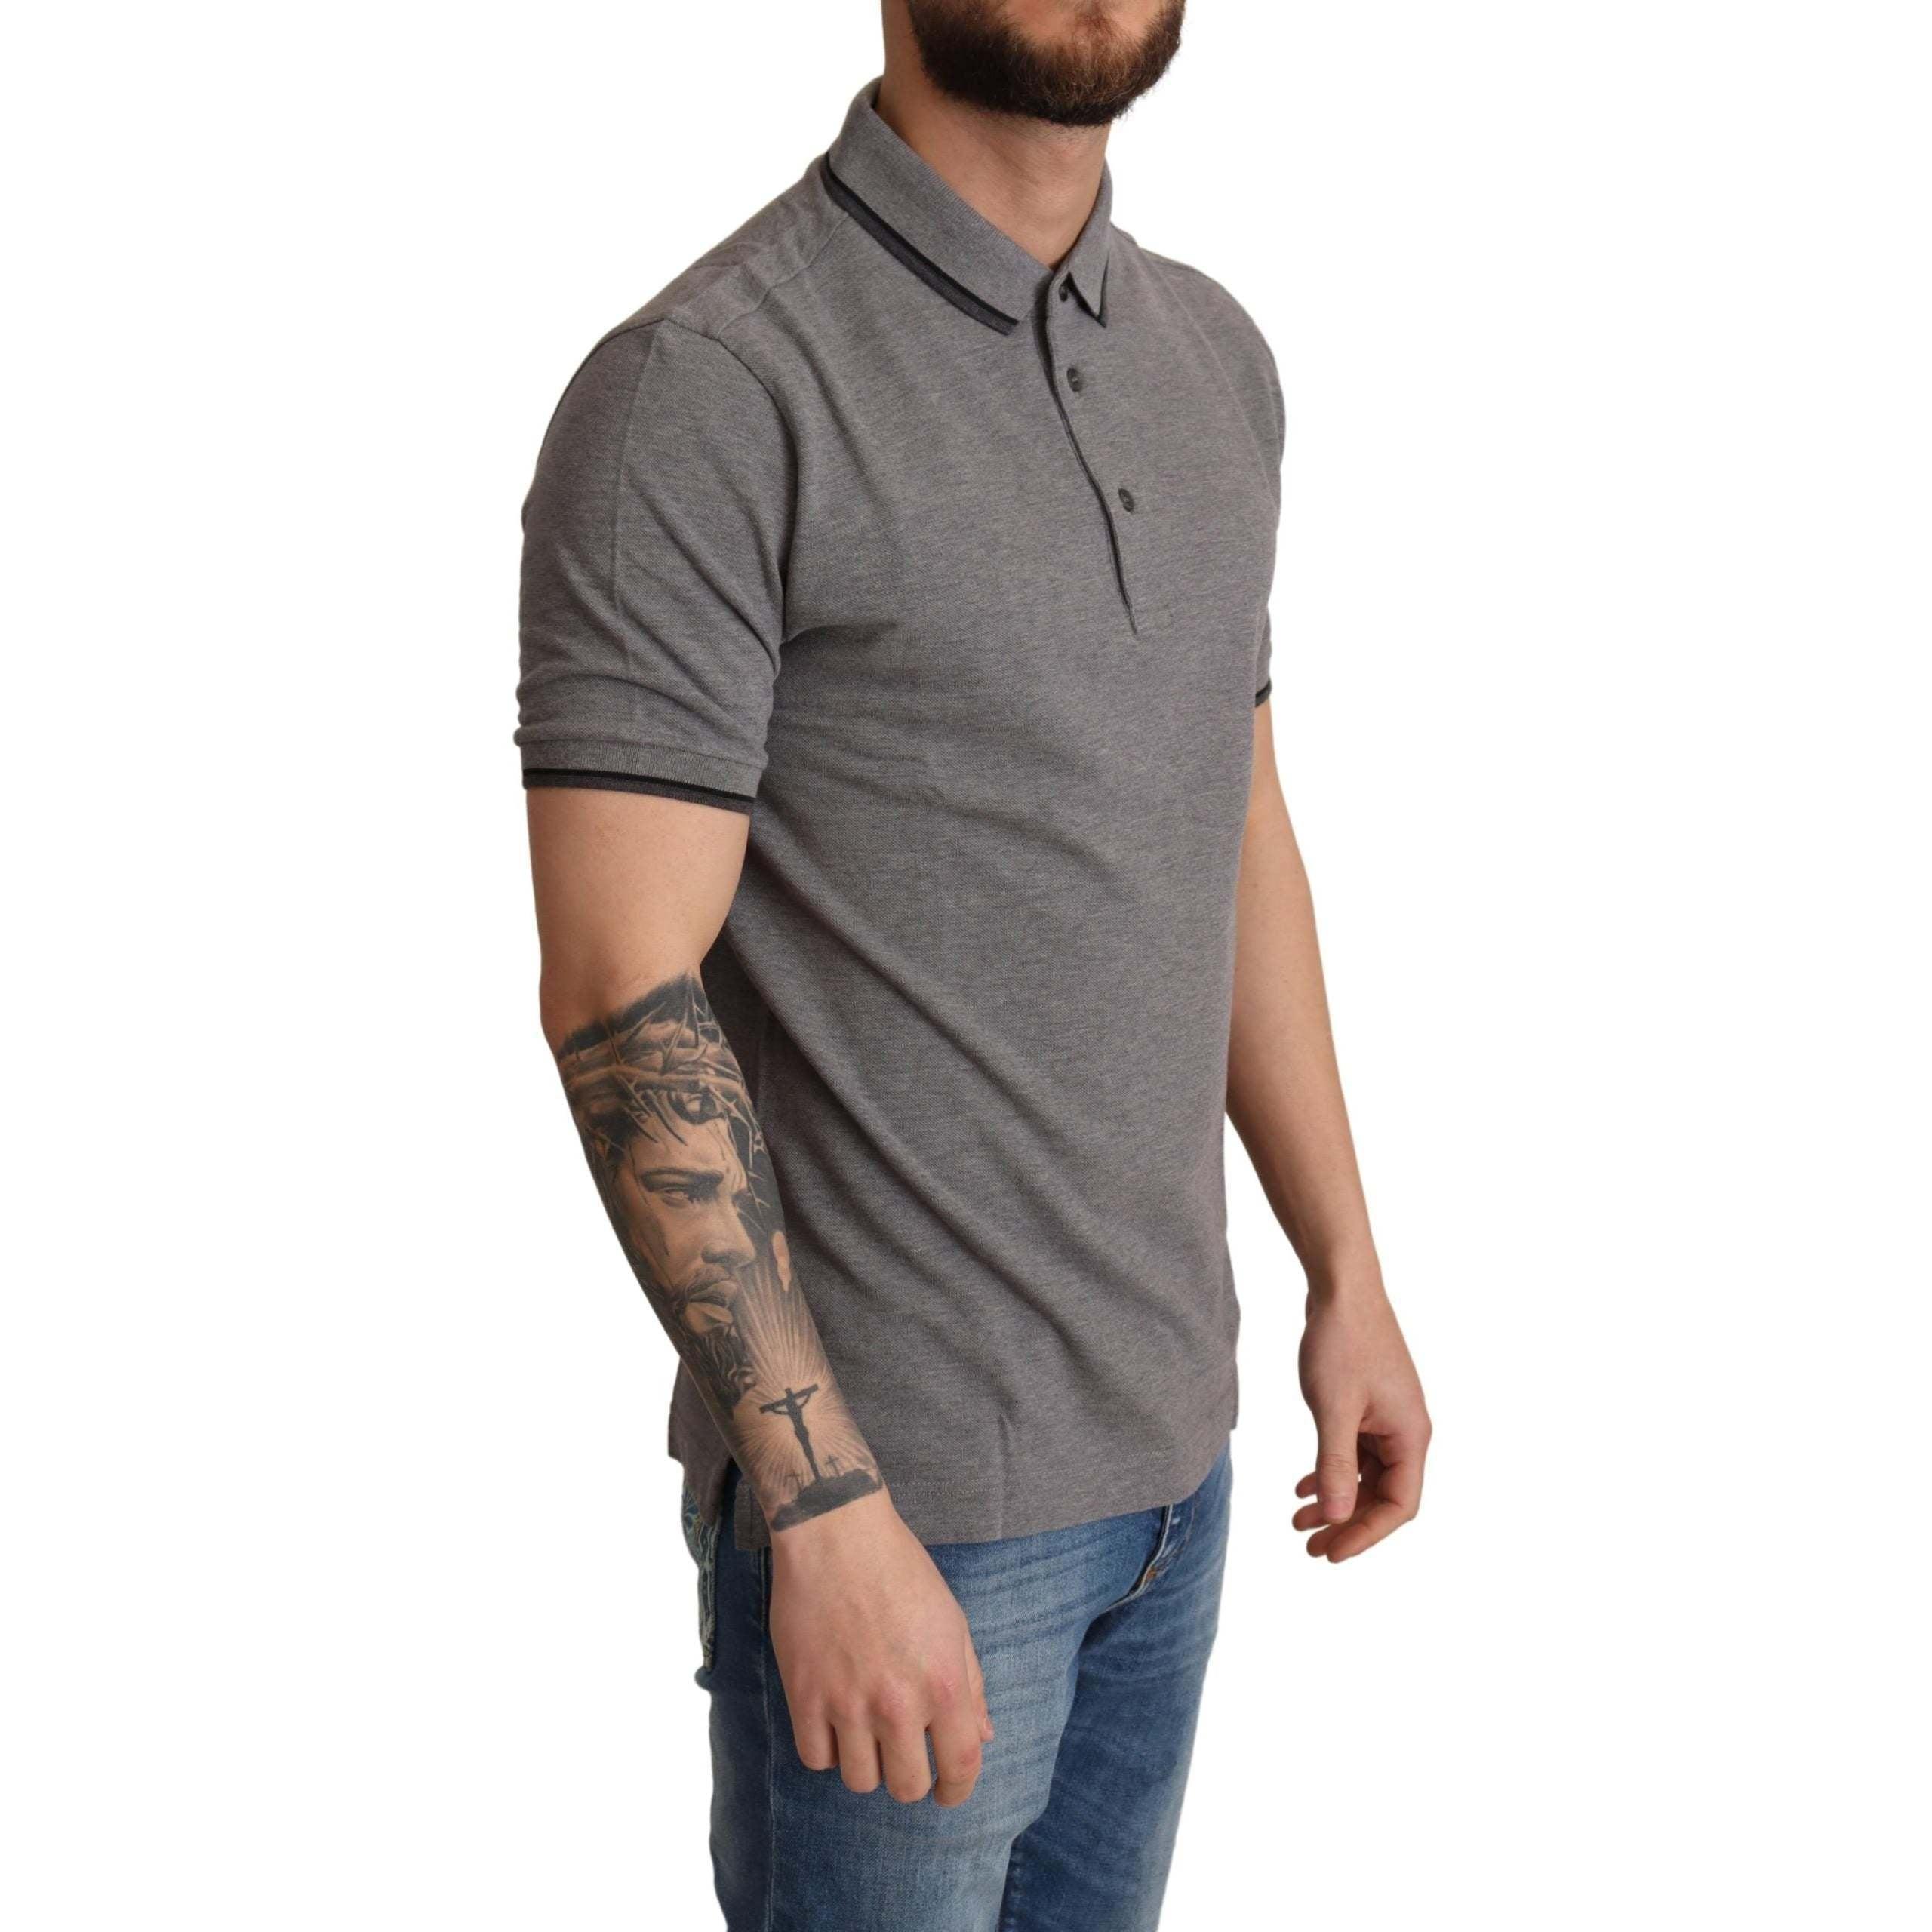 Dolce & Gabbana Cotton T-shirt in Light Grey Mens Clothing T-shirts Short sleeve t-shirts for Men Grey 